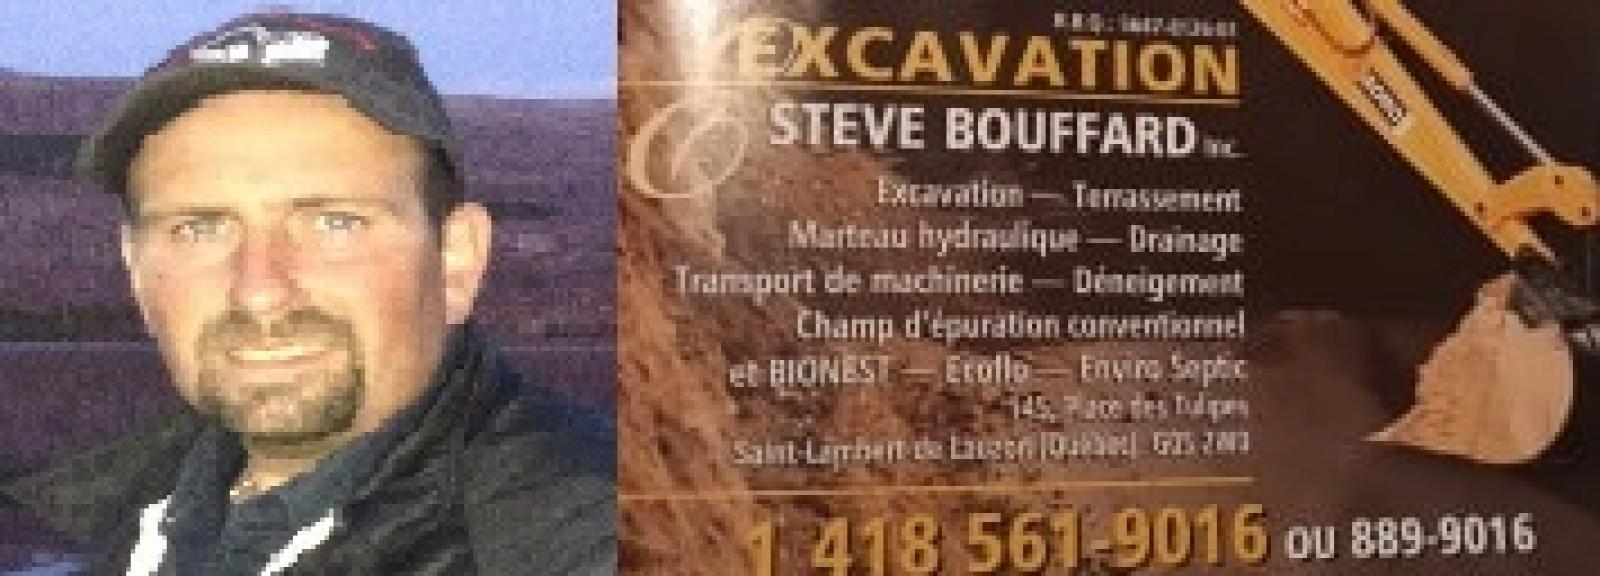 Excavation Steve Bouffard Logo